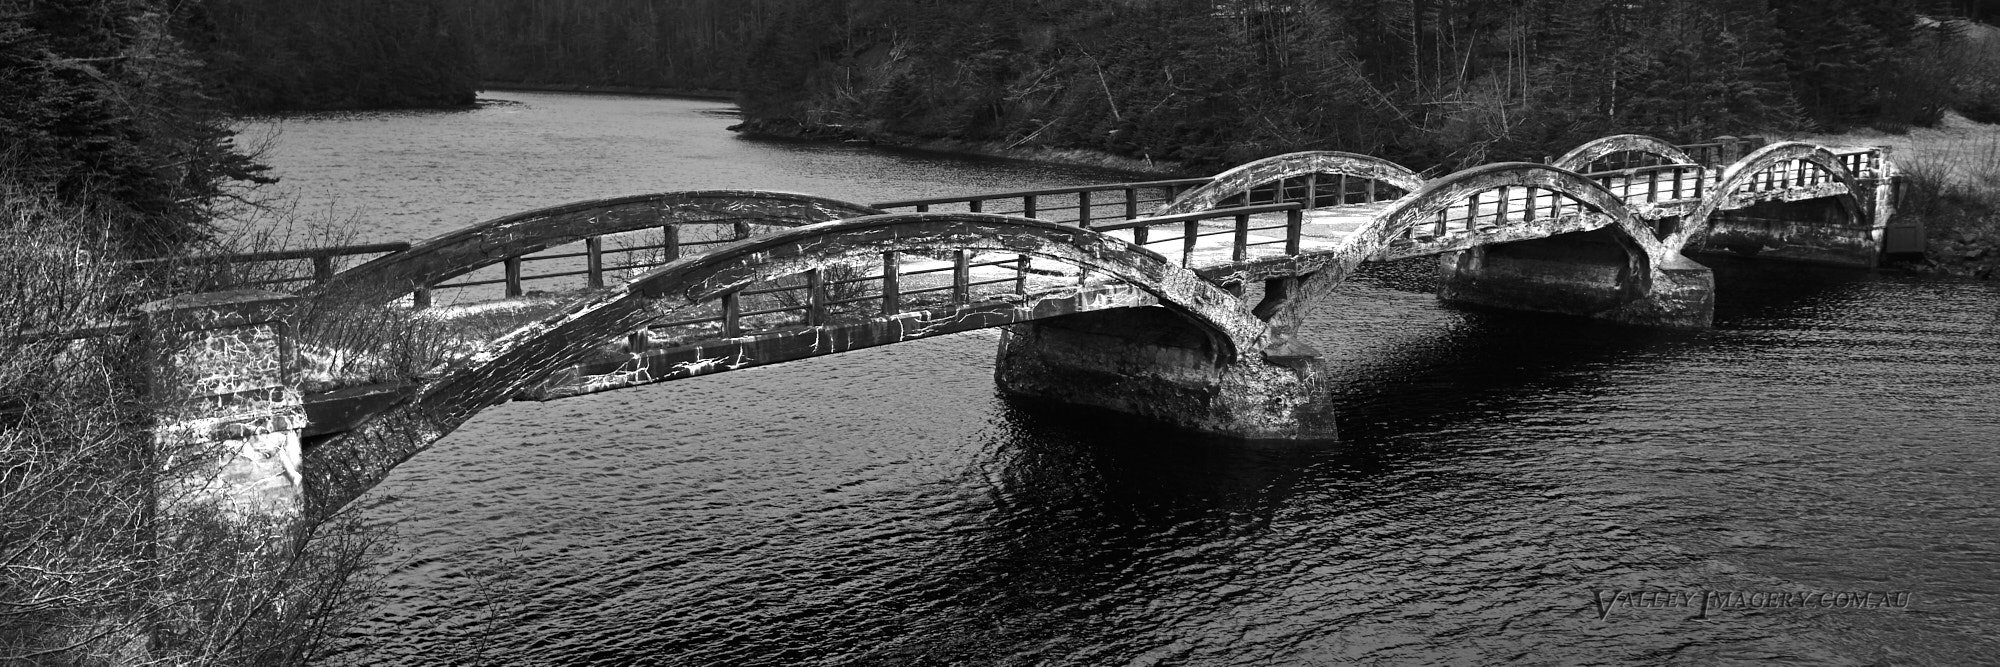 Derelict bridge, Newfoundland, Canada